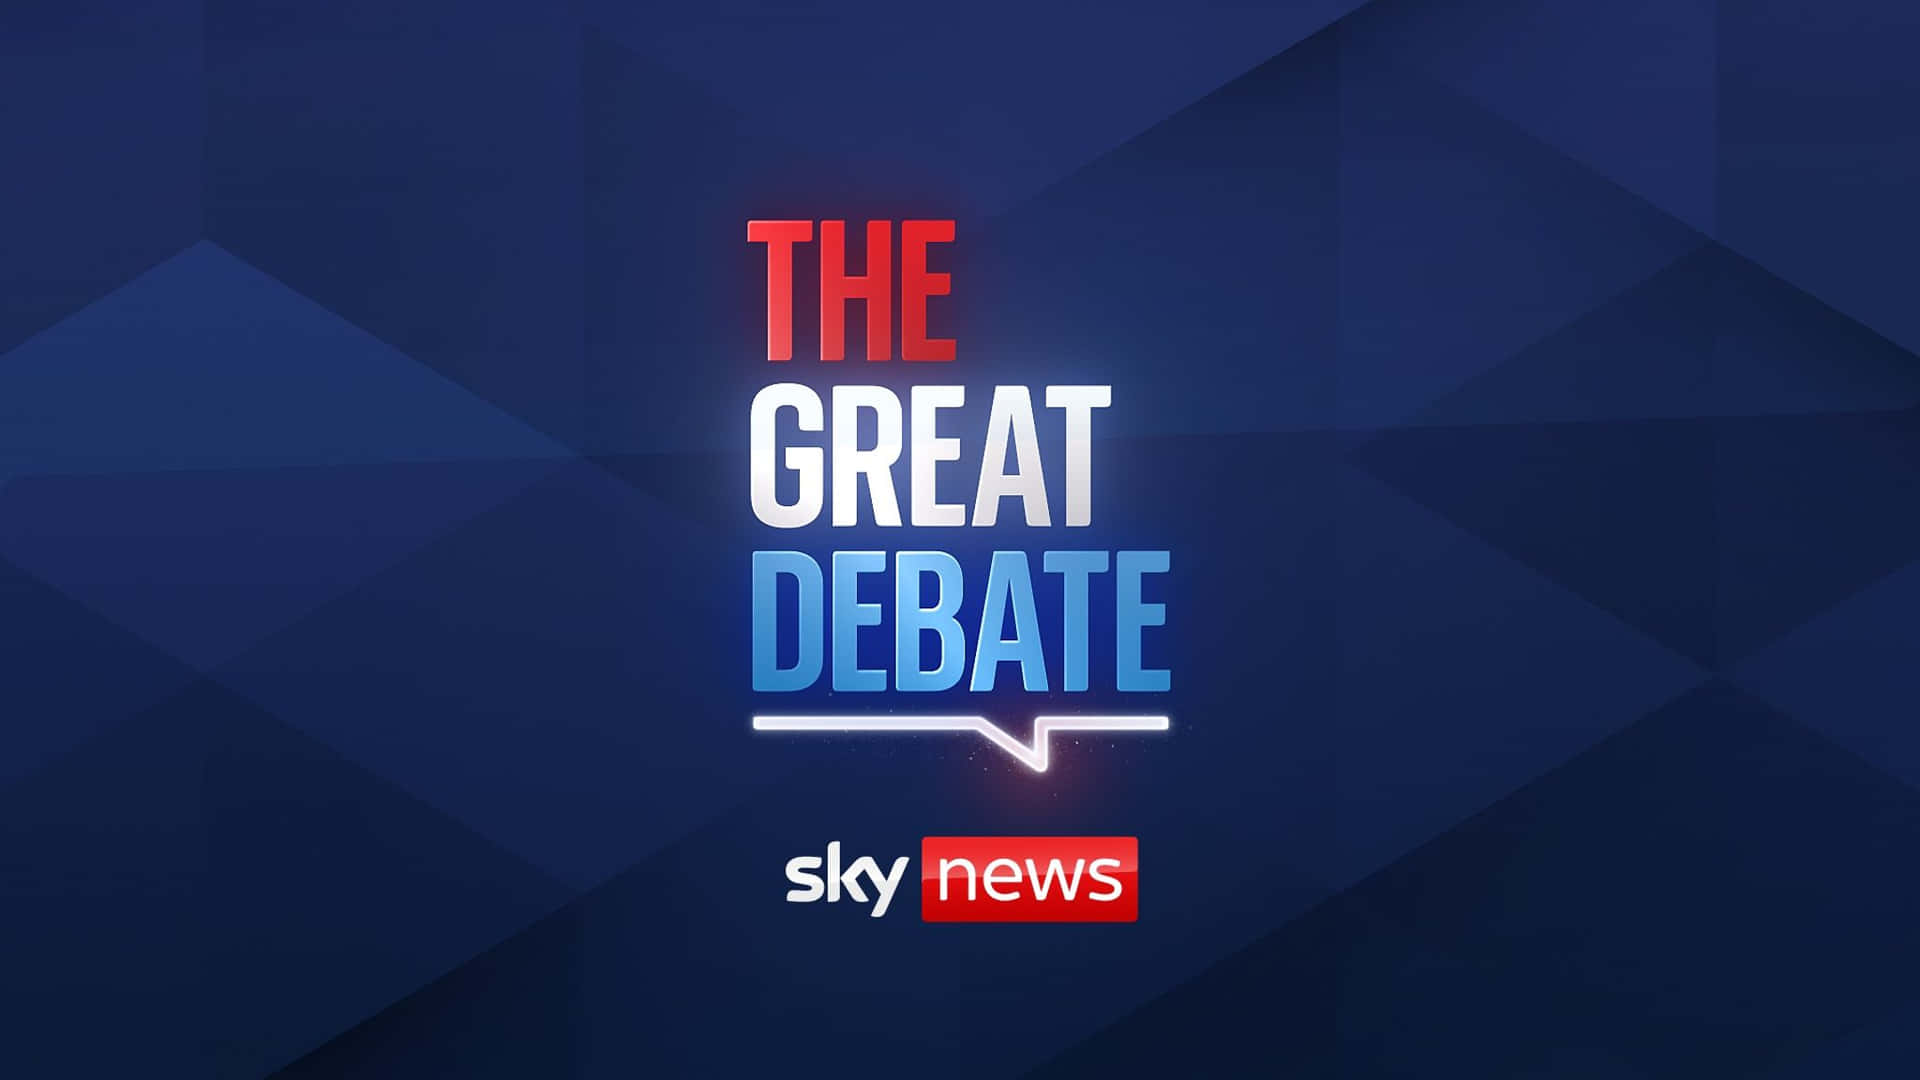 The Great Debate Sky News Wallpaper